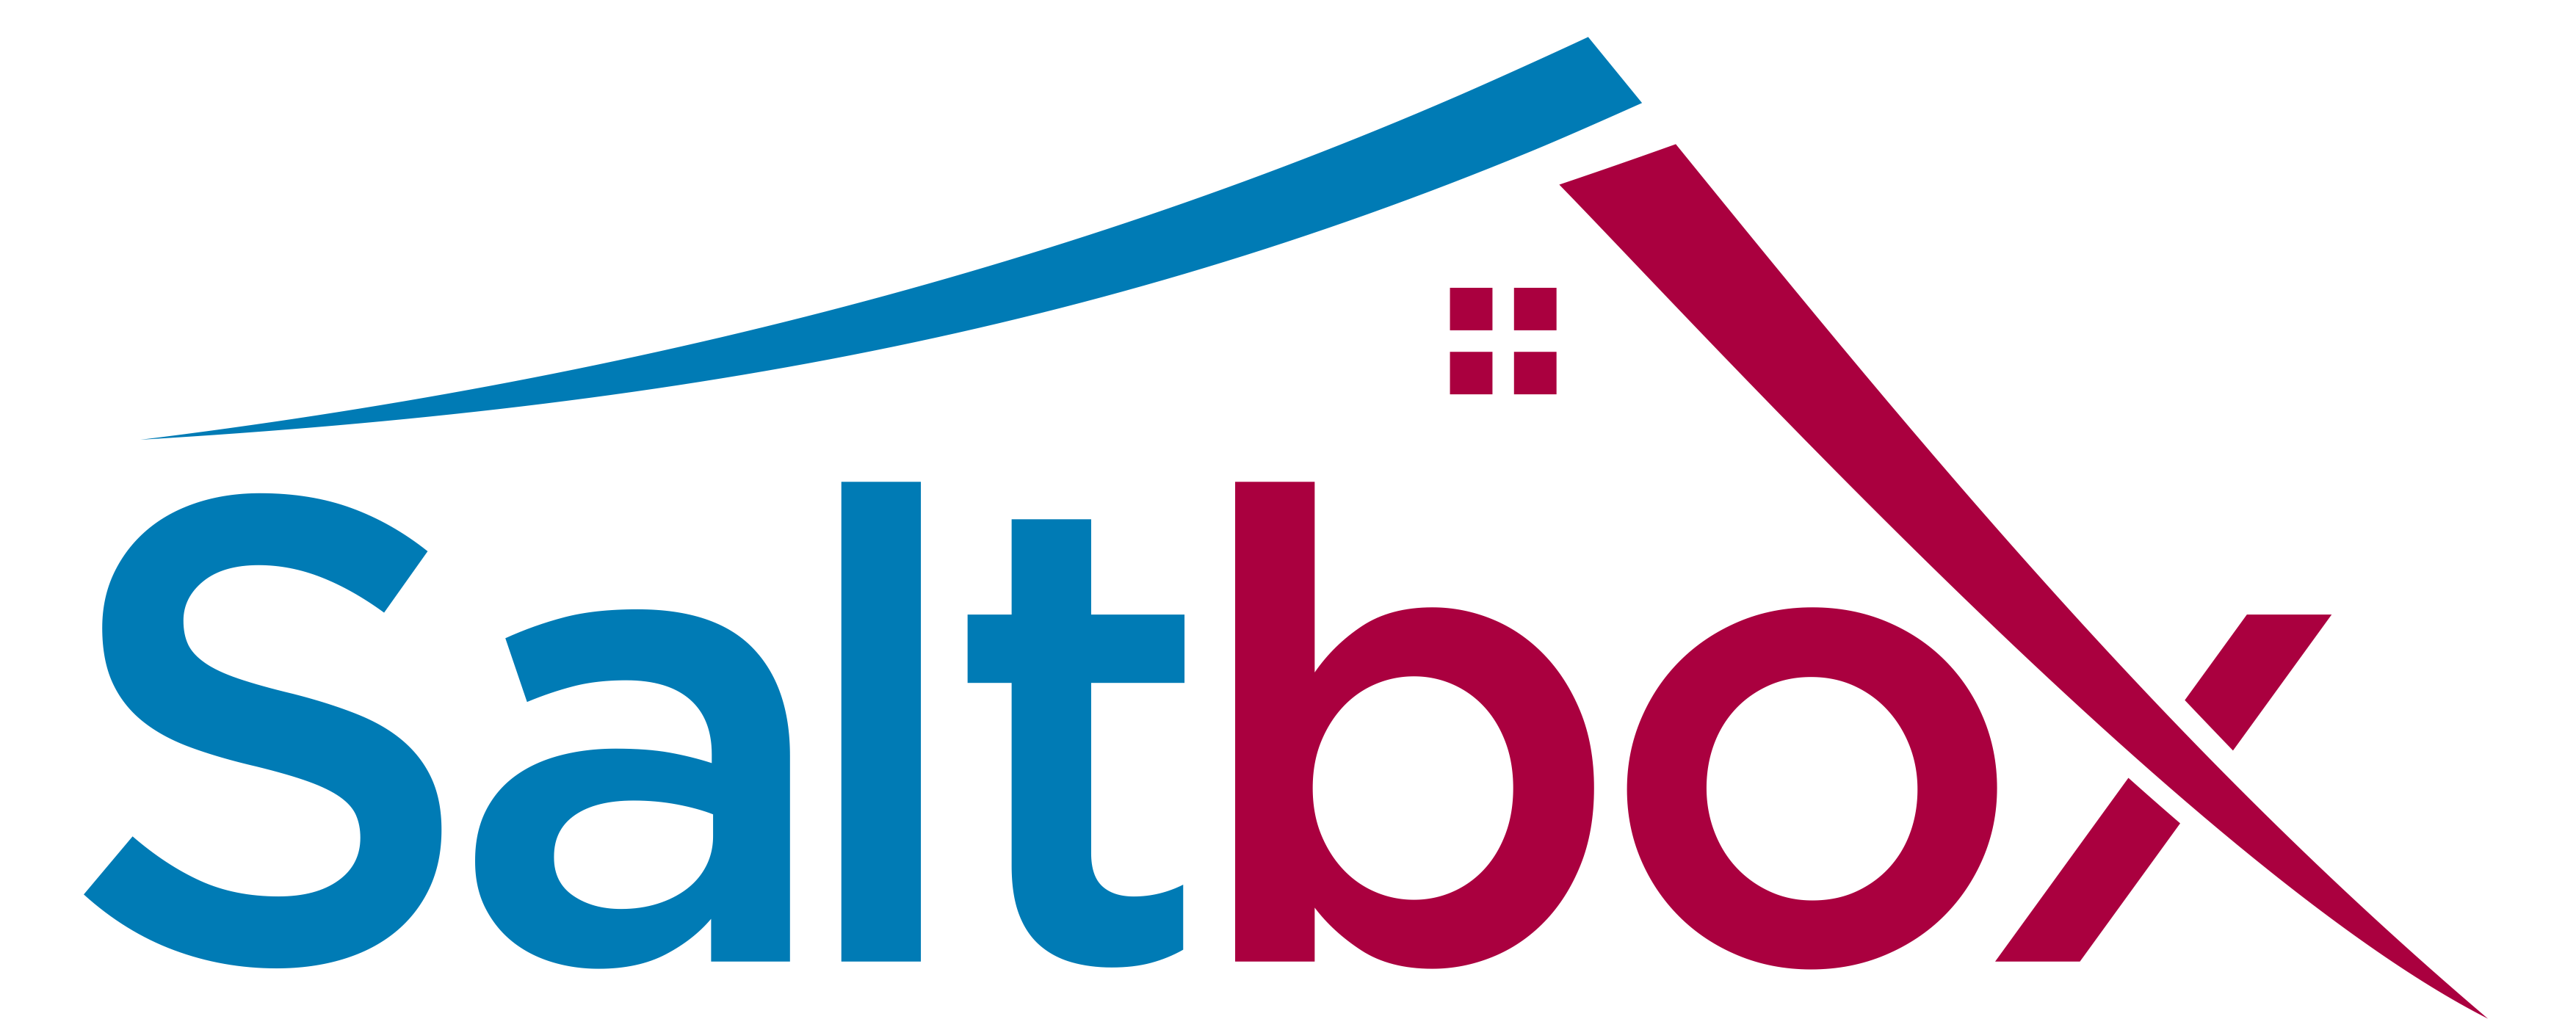 Saltbox-Logo-1